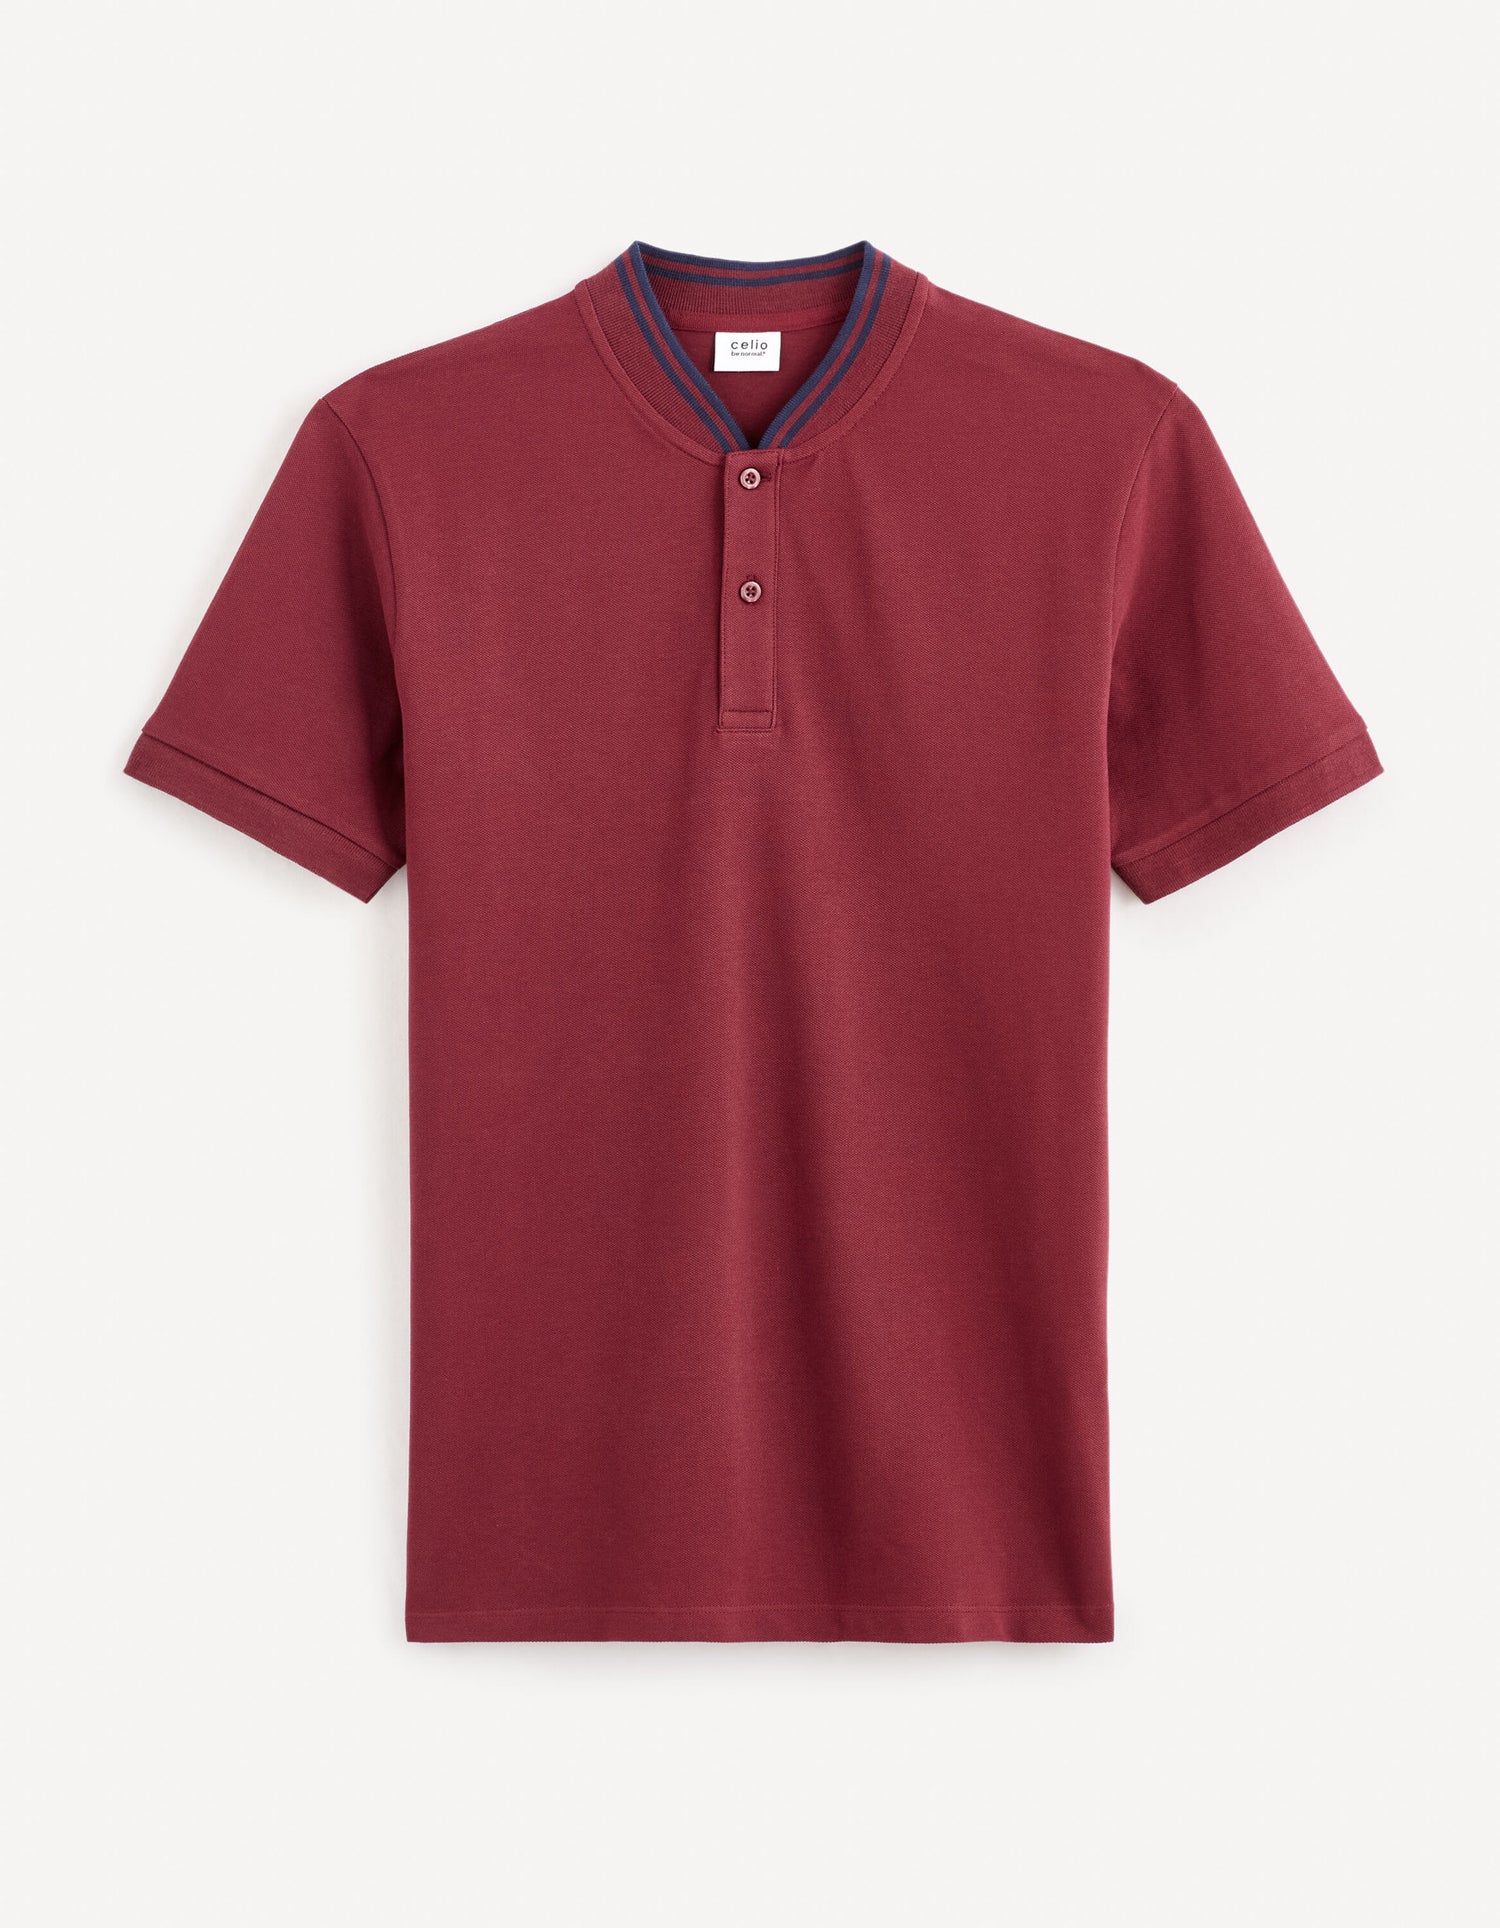 100% Cotton Piqué Polo Shirt - Burgundy_FELIME_BURGUNDY_01